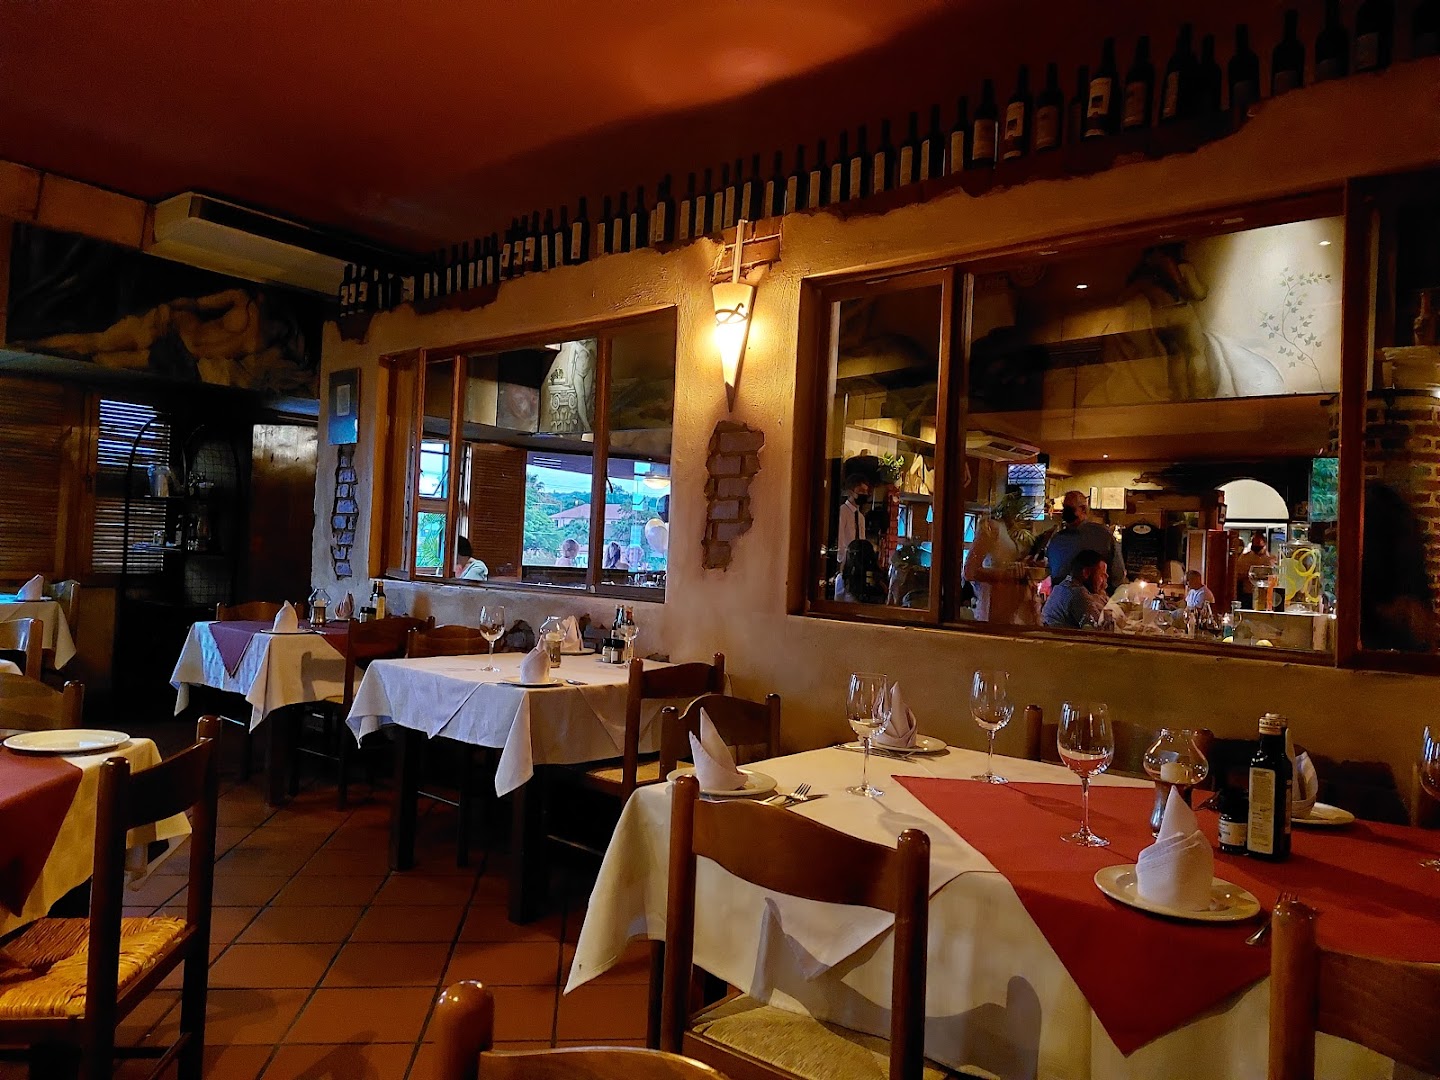 Caraffa Restaurant